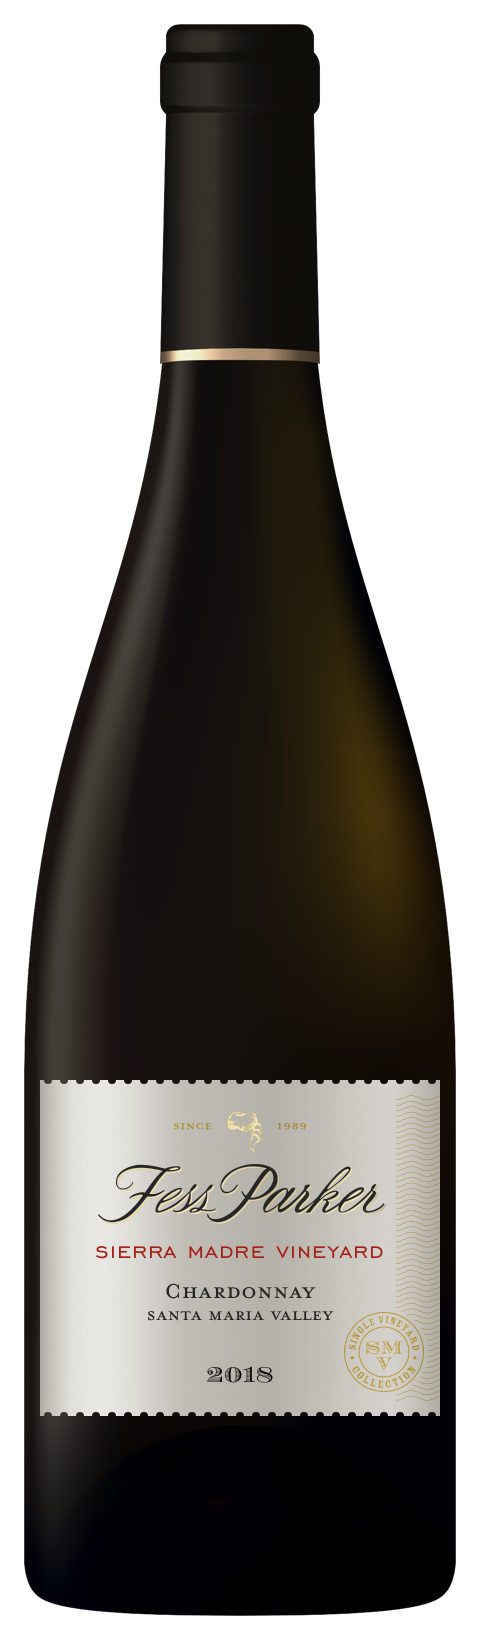 Bottle shot of Sierra Madre Vineyard Chardonnay